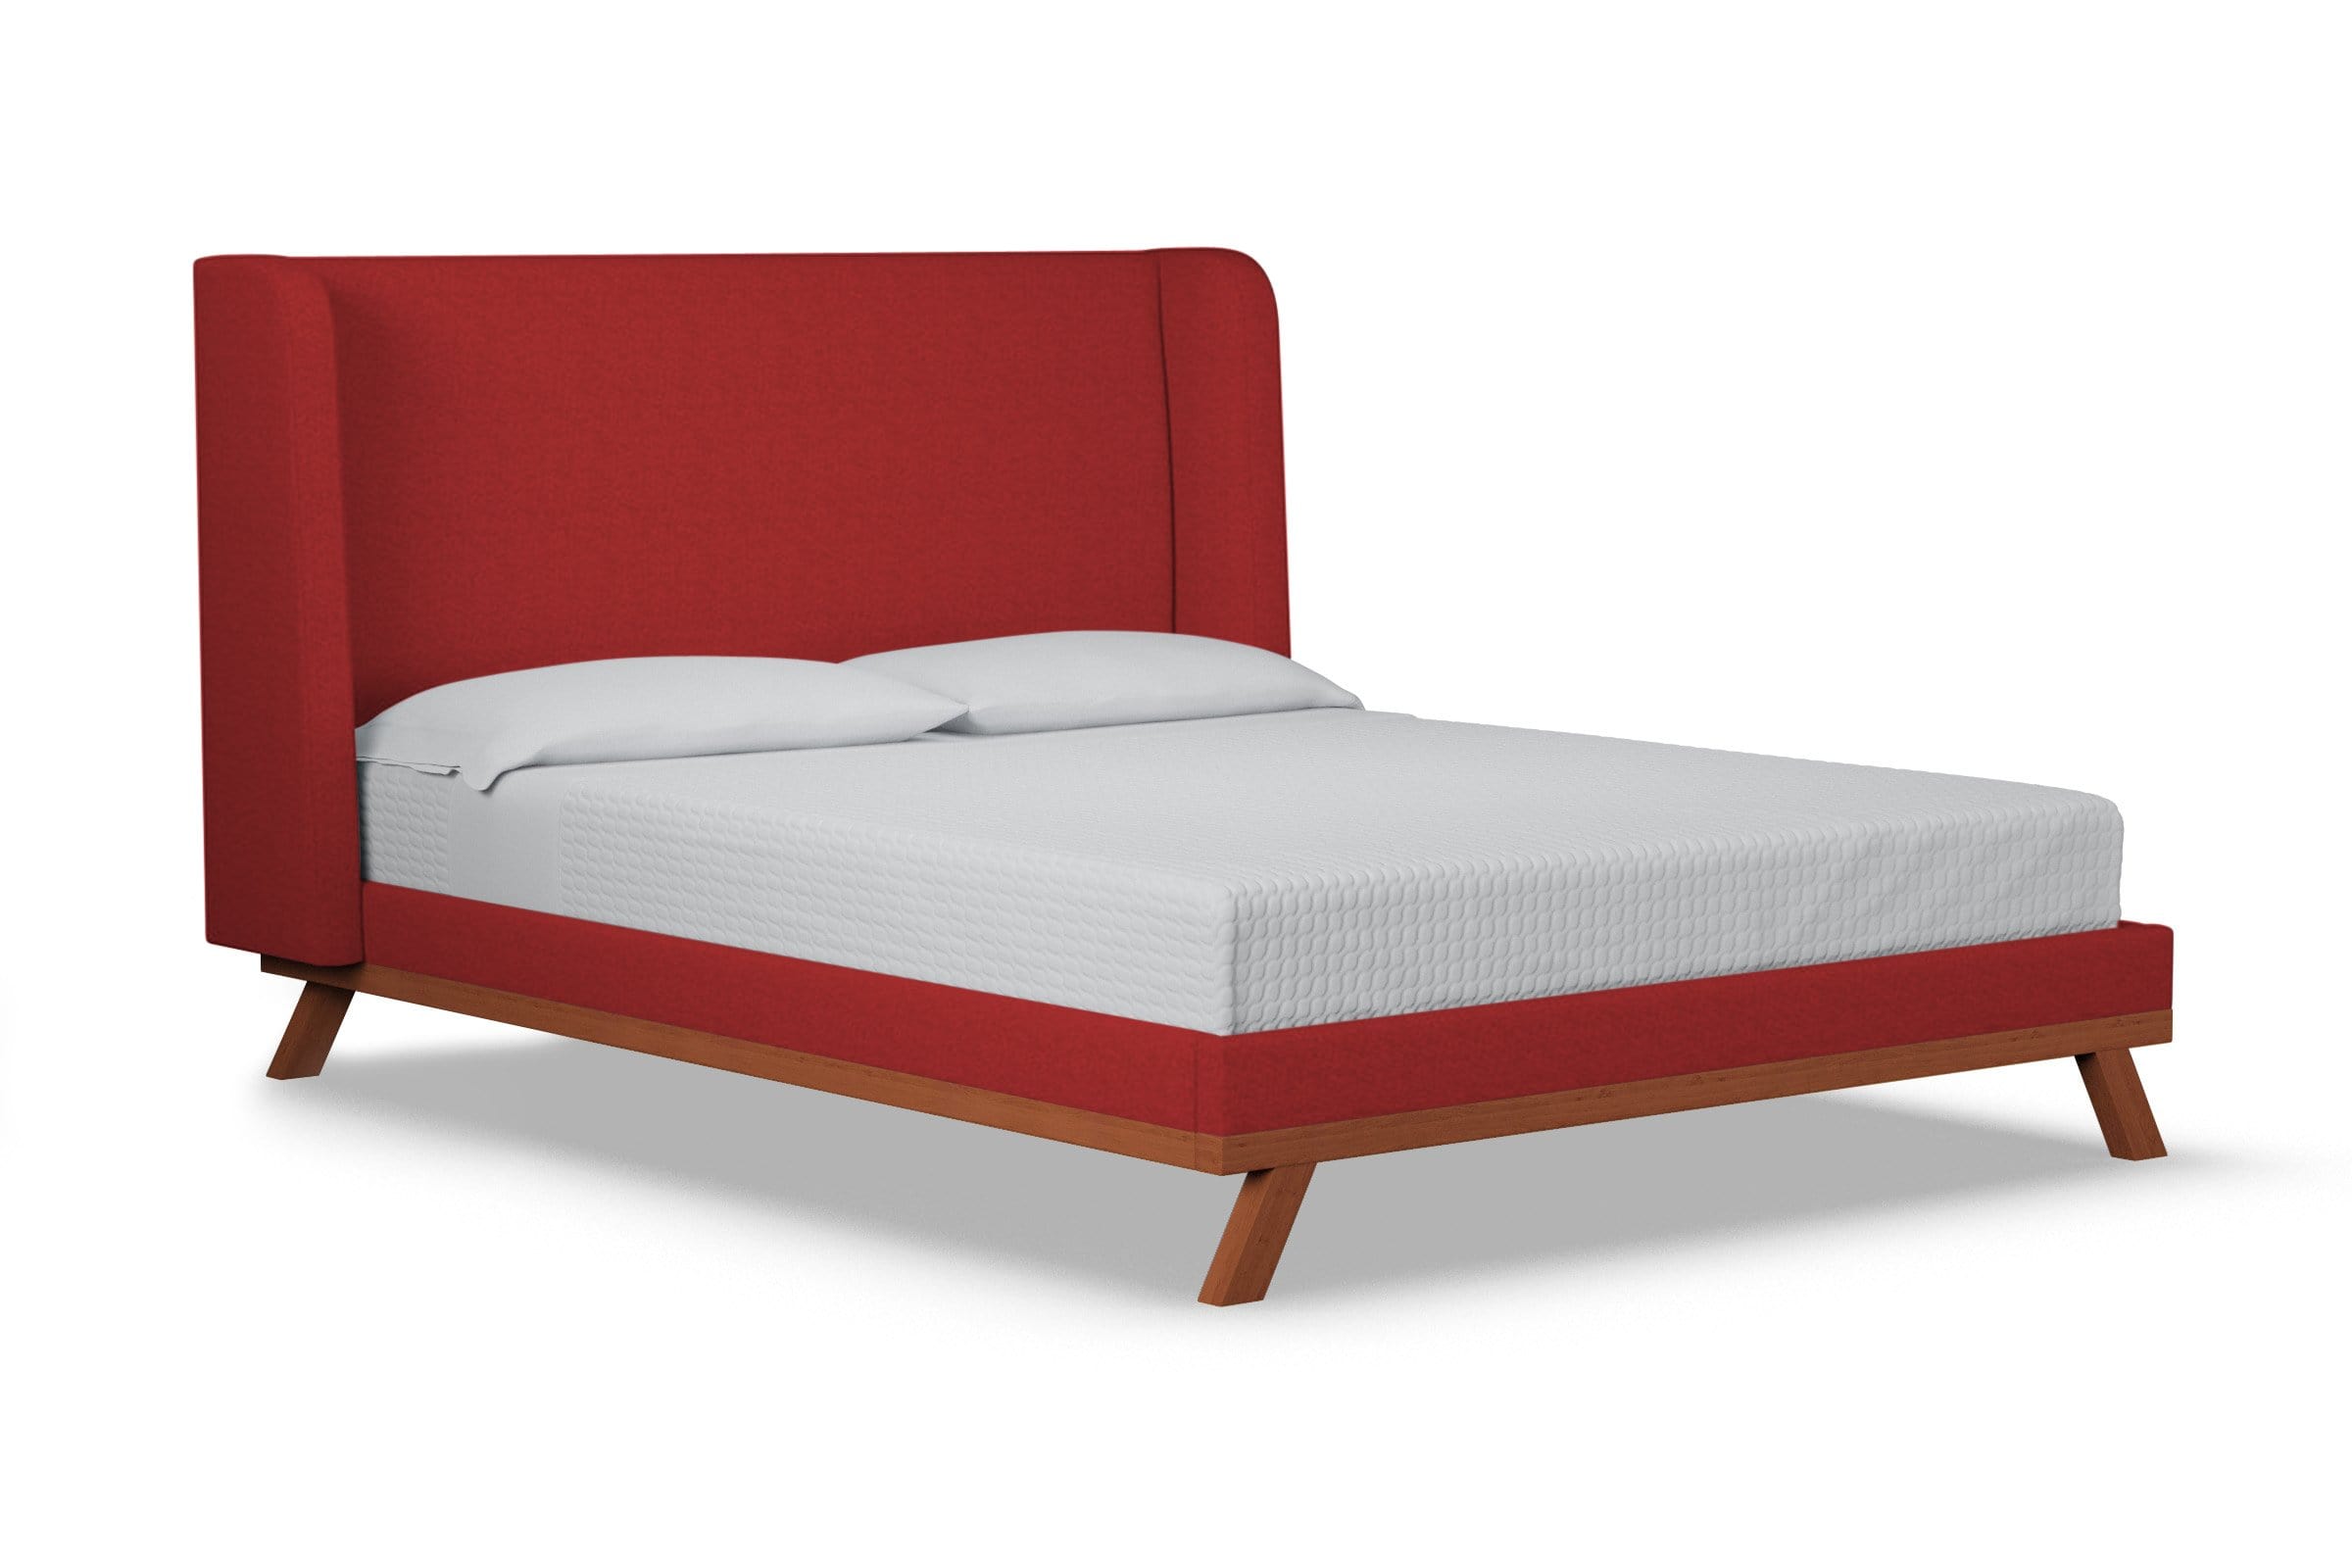 Tatum Upholstered Bed -  Eastern King  - Red -  Bedroom Furniture sold by Apt2B